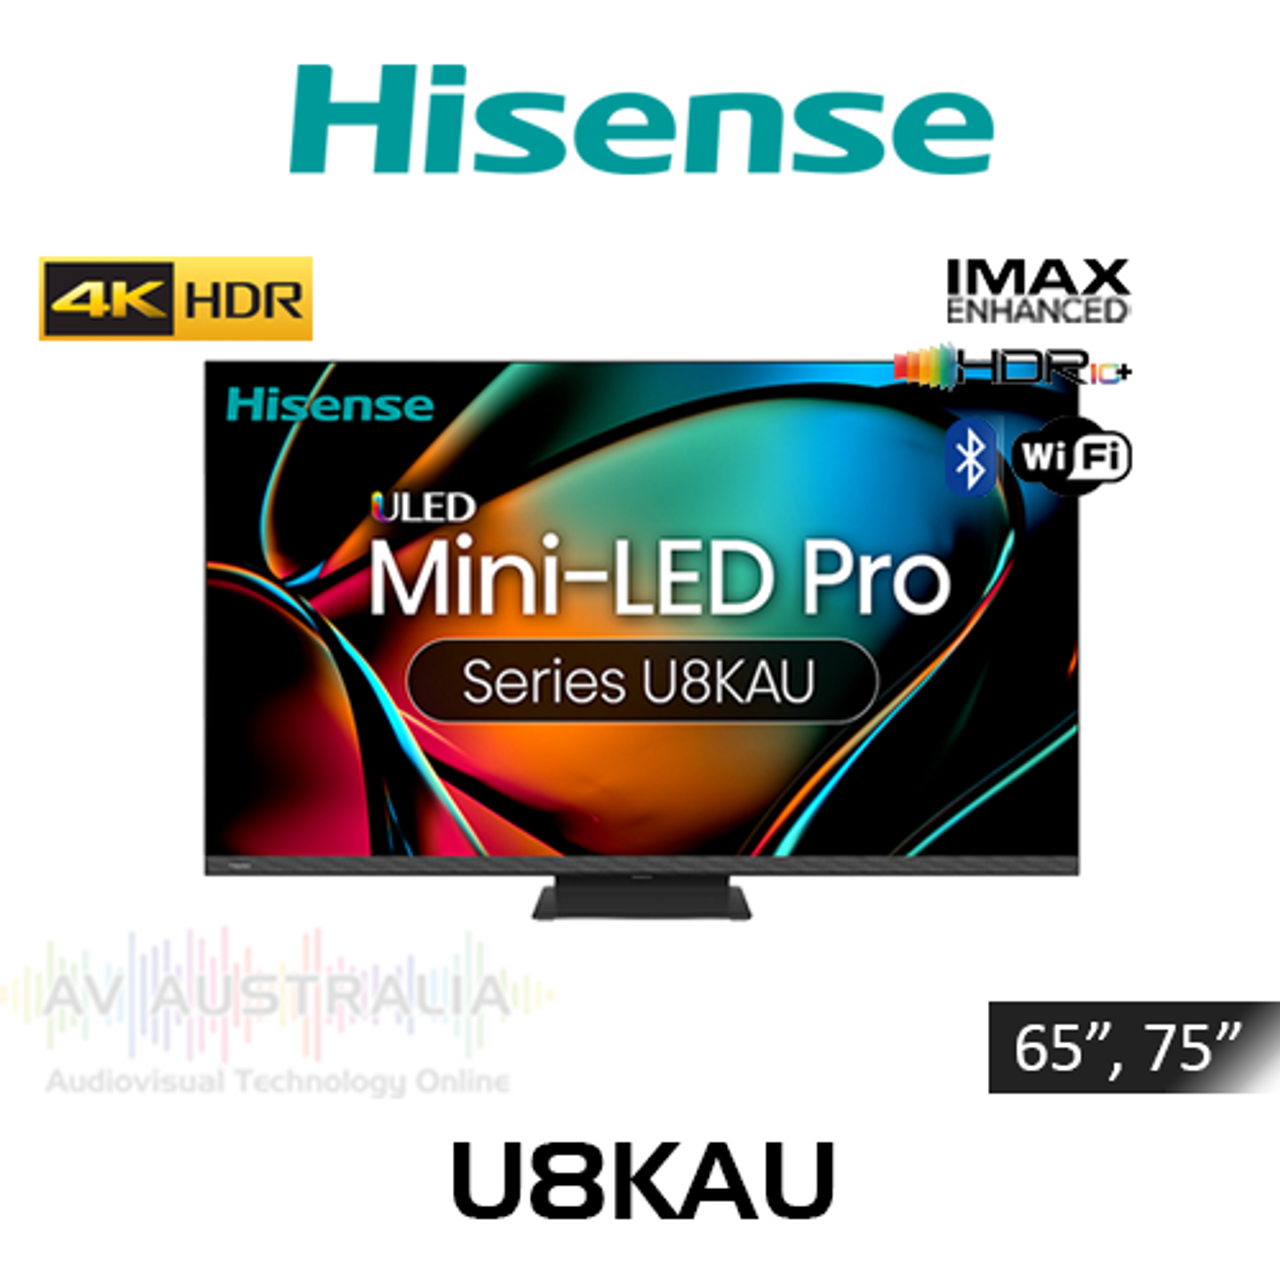 Hisense U8KAU 4K ULED Mini-LED Pro Smart TV  (65", 75")